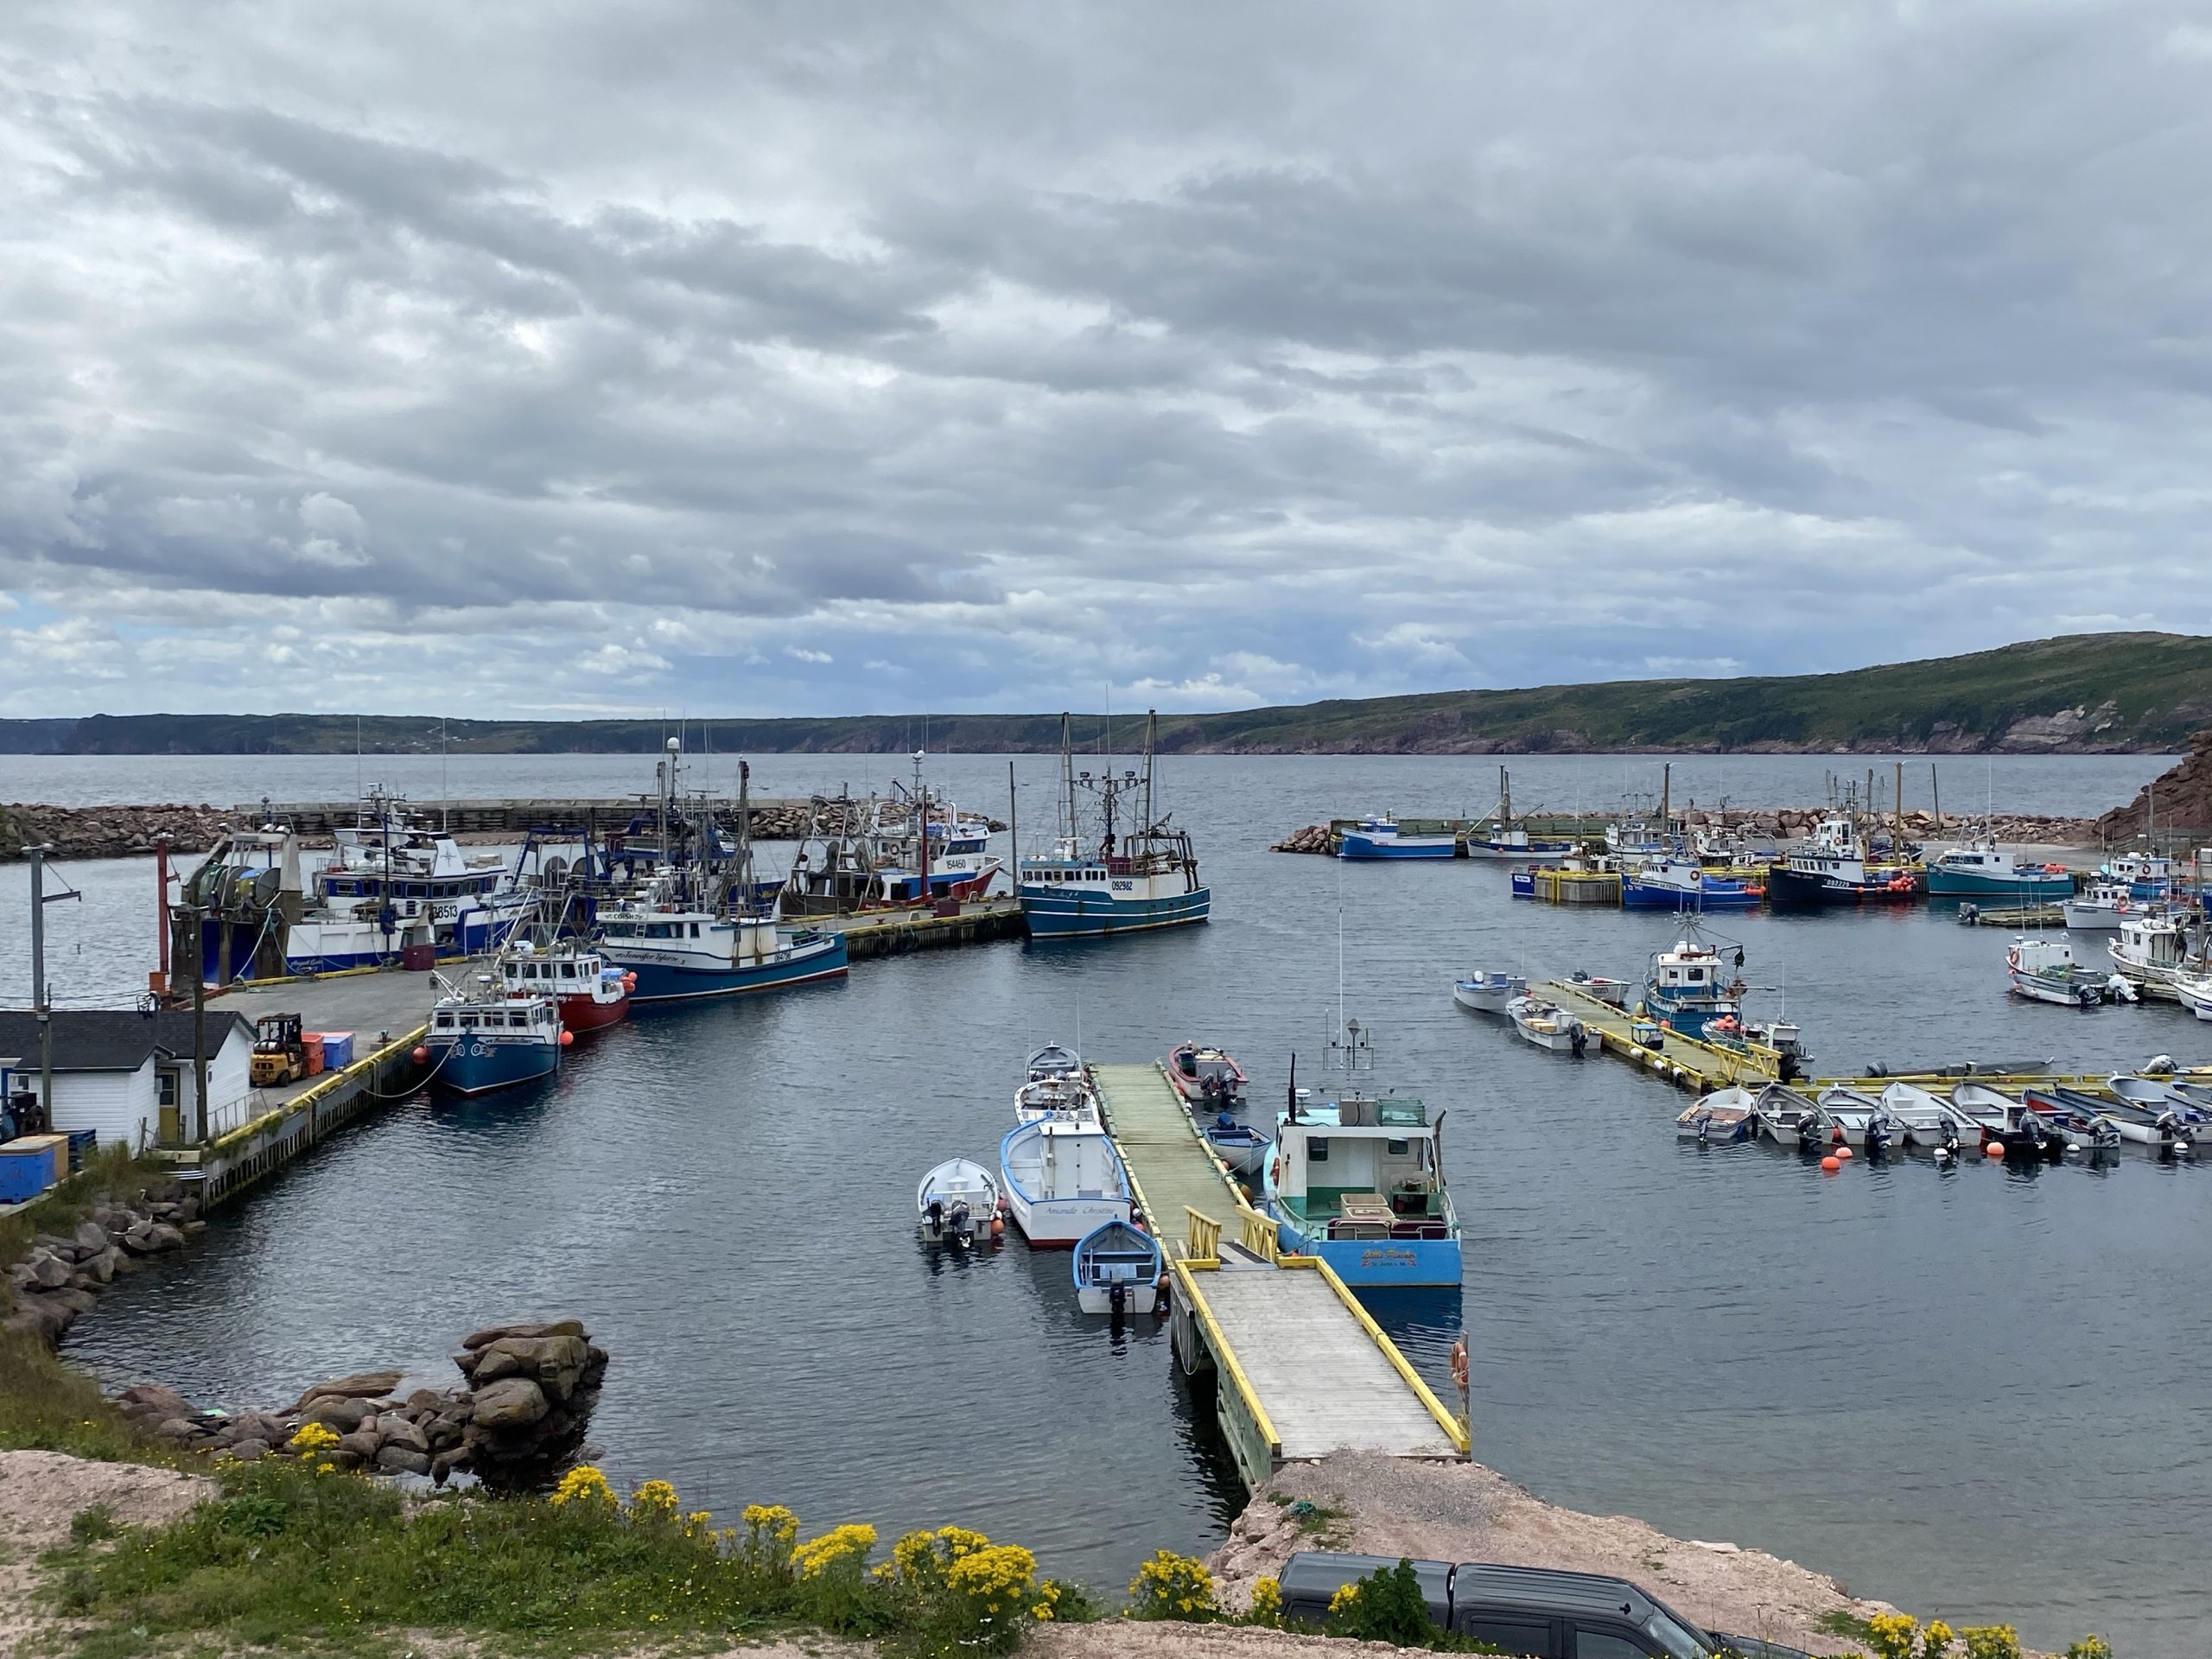 The harbor full of fishing boats in Bay de Verde in Newfoundland.